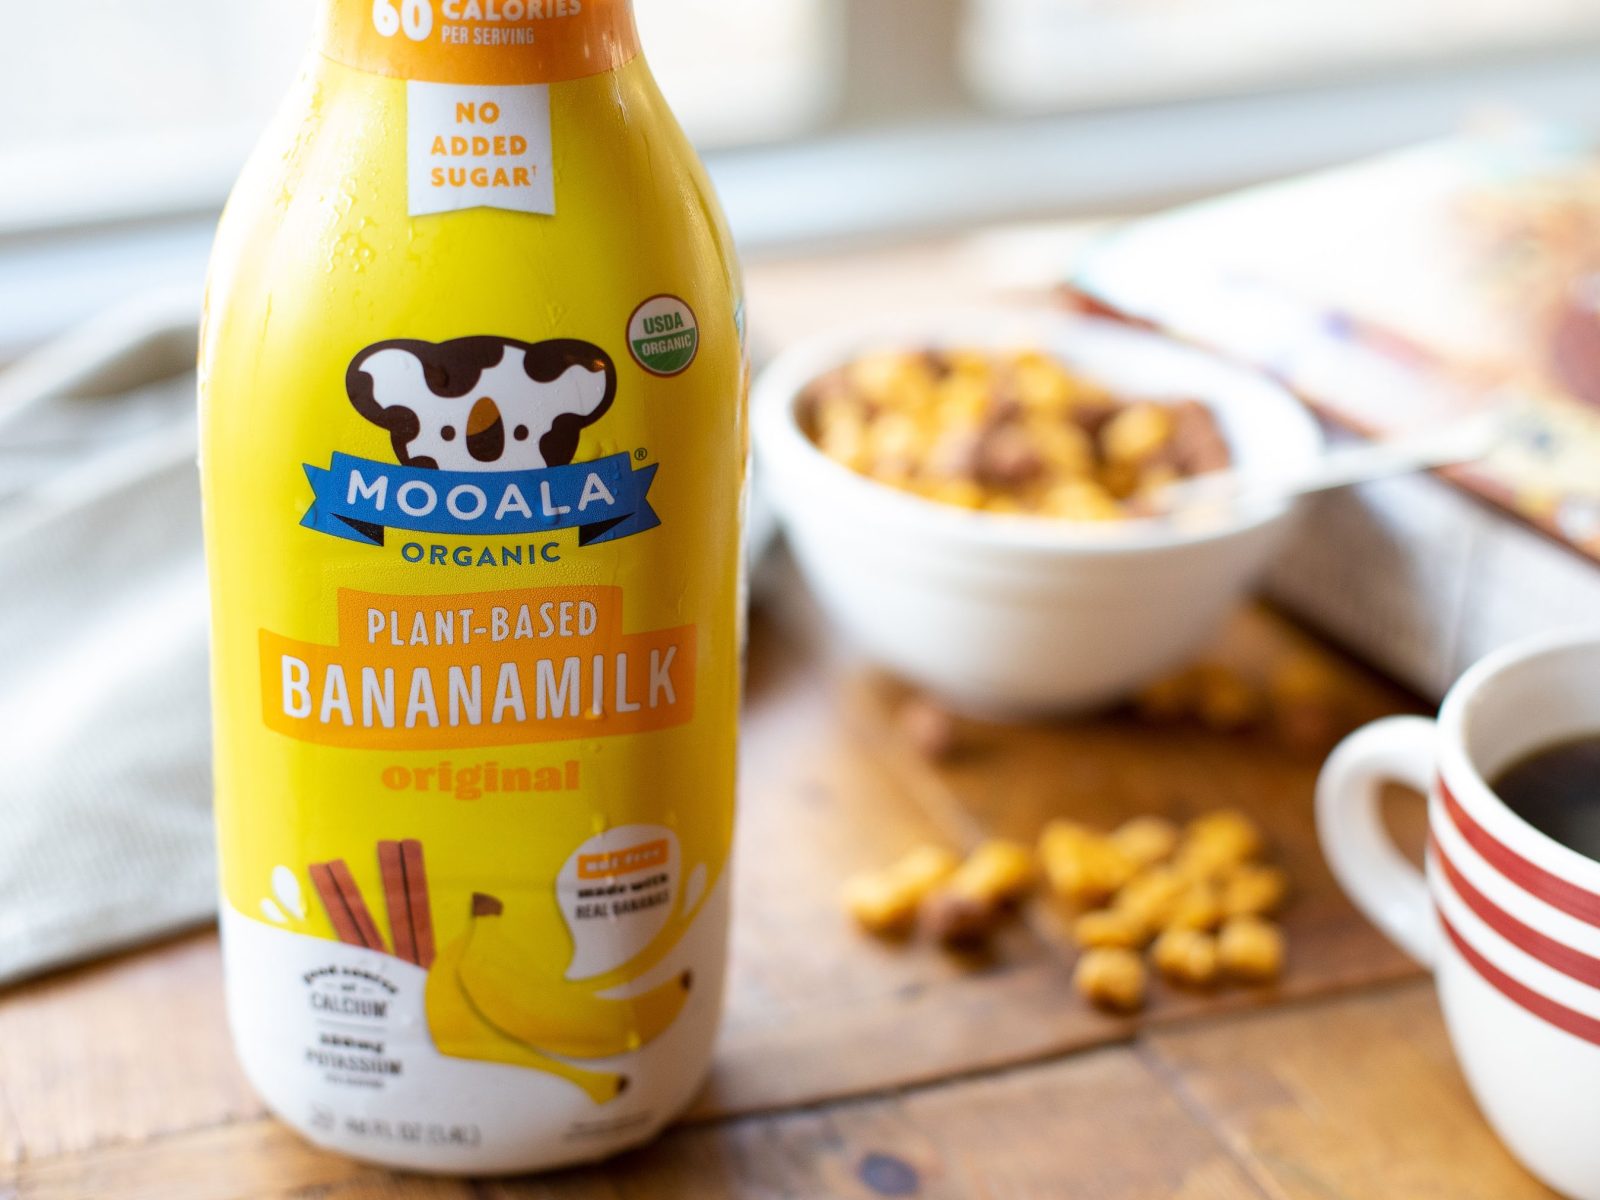 Mooala Organic Bananamilk Is Just $1.50 At Publix